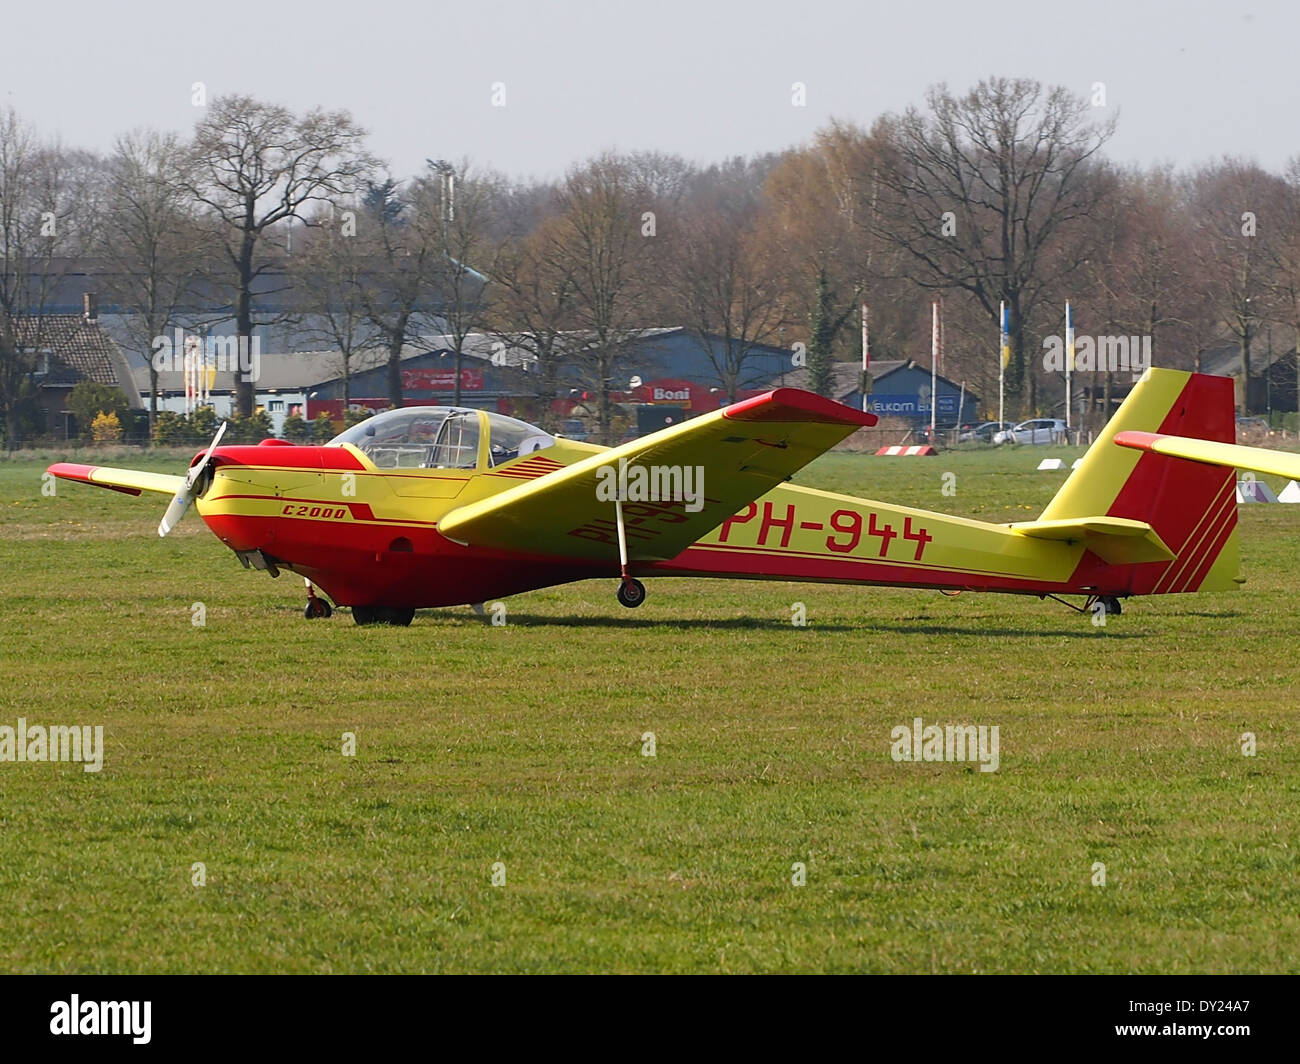 PH-944, C2000 at Hilversum Airport (ICAO EHHV) Stock Photo